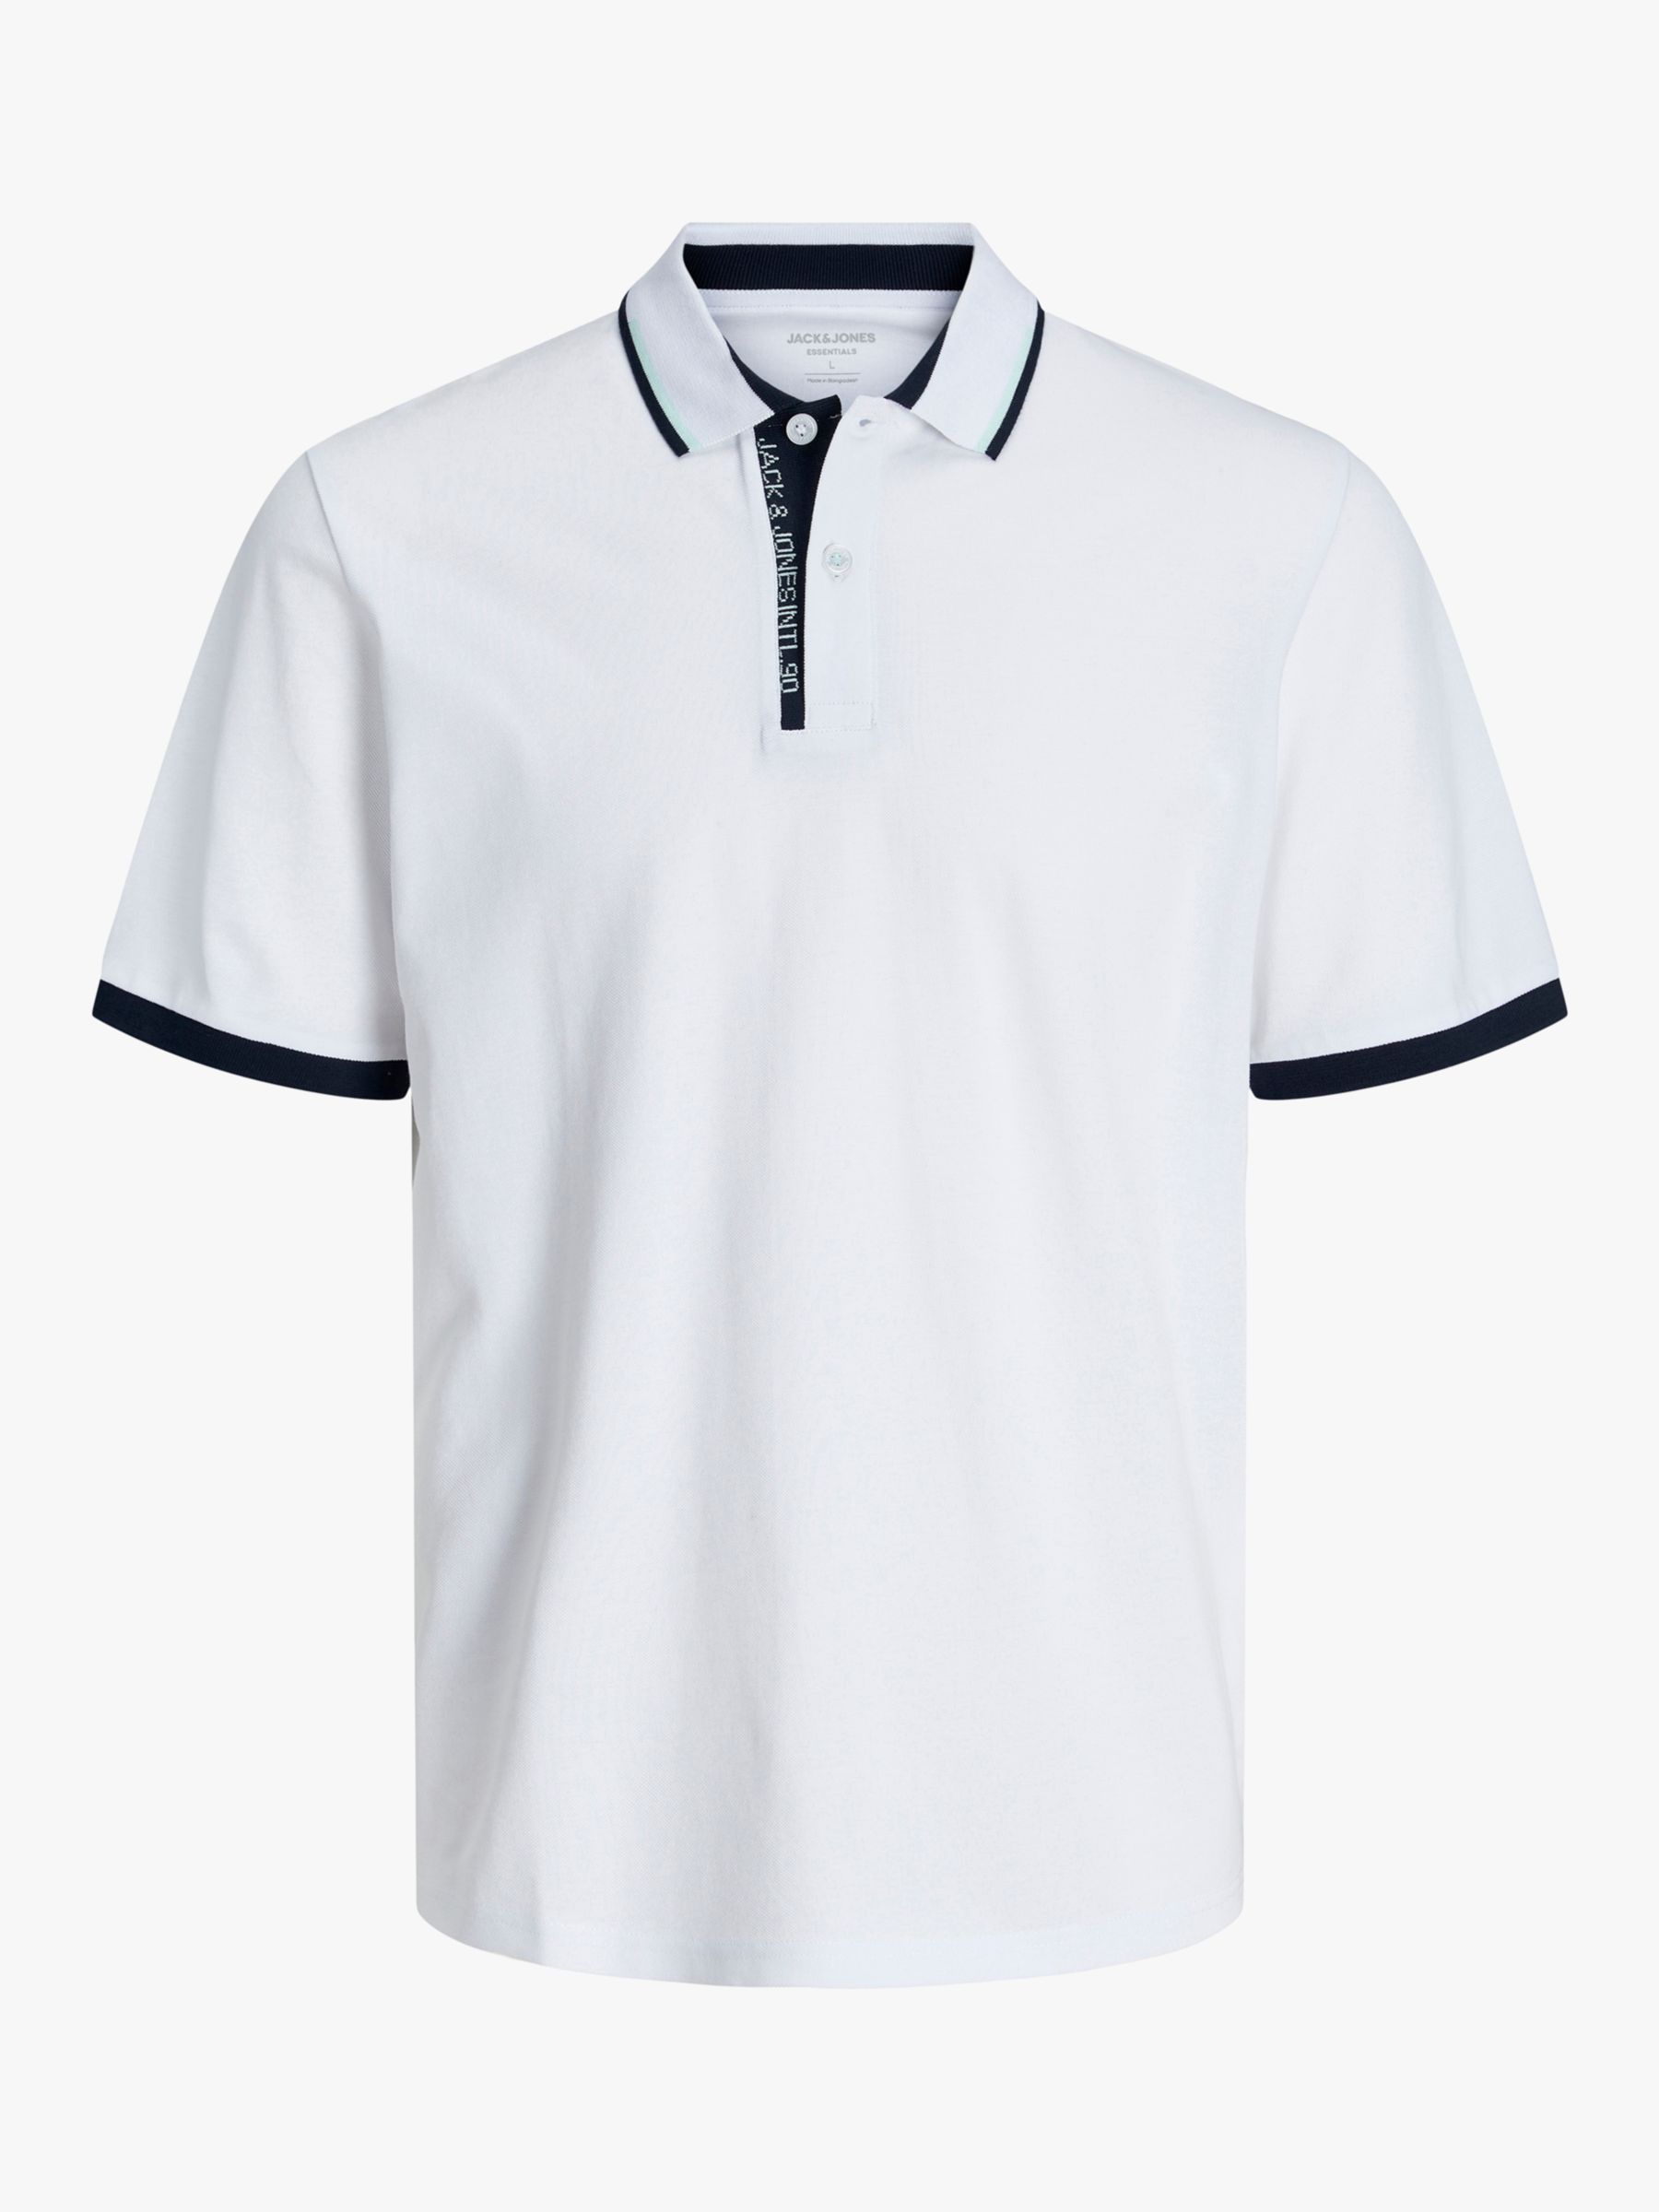 Jack & Jones Kids' Steel Cotton Polo Shirt, White at John Lewis & Partners